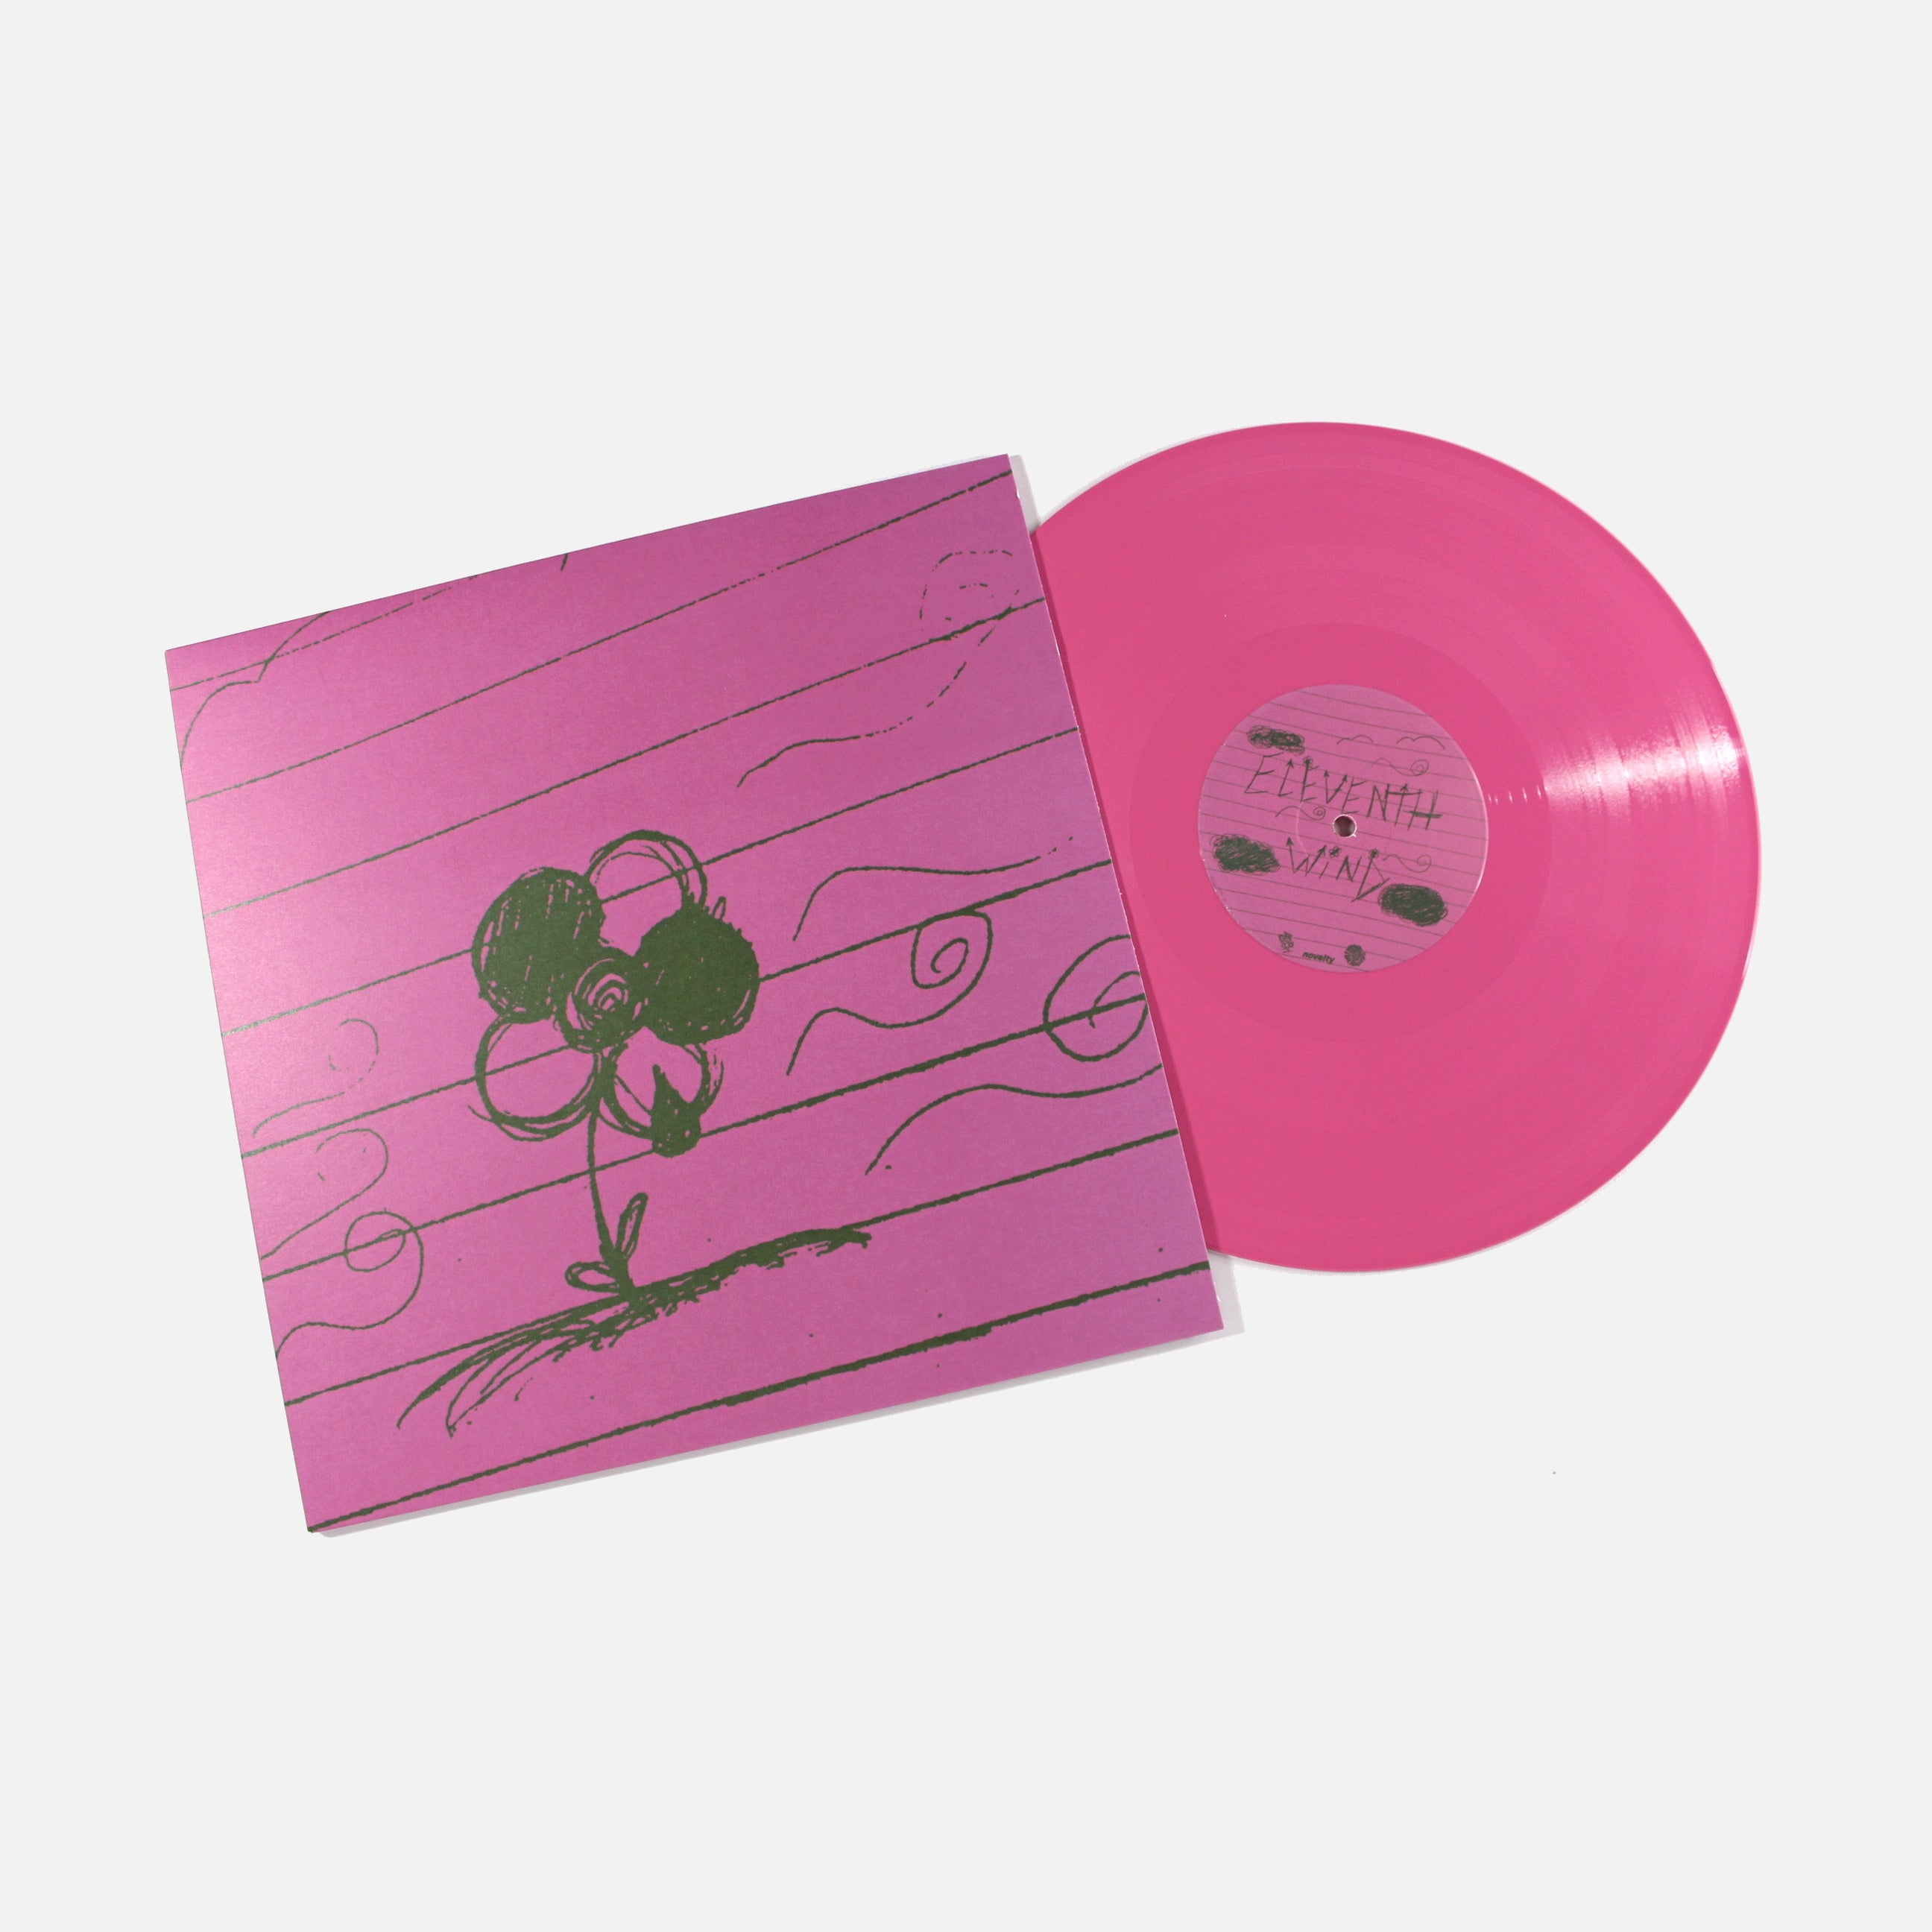 akai solo eleventh wind opaque pink vinyl